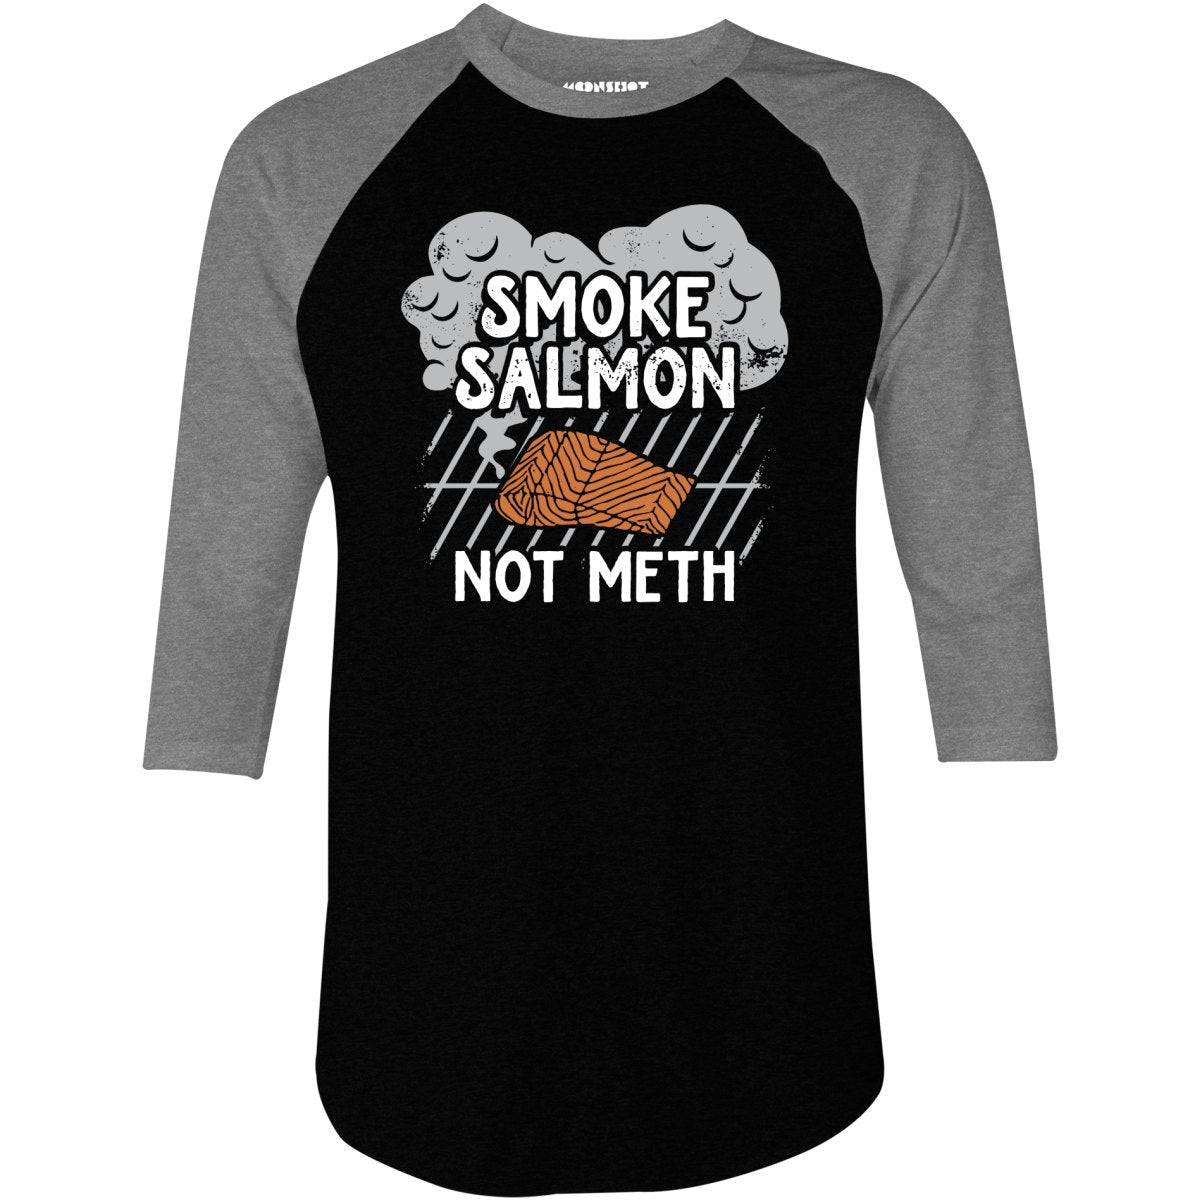 Smoke Salmon Not Meth - 3/4 Sleeve Raglan T-Shirt